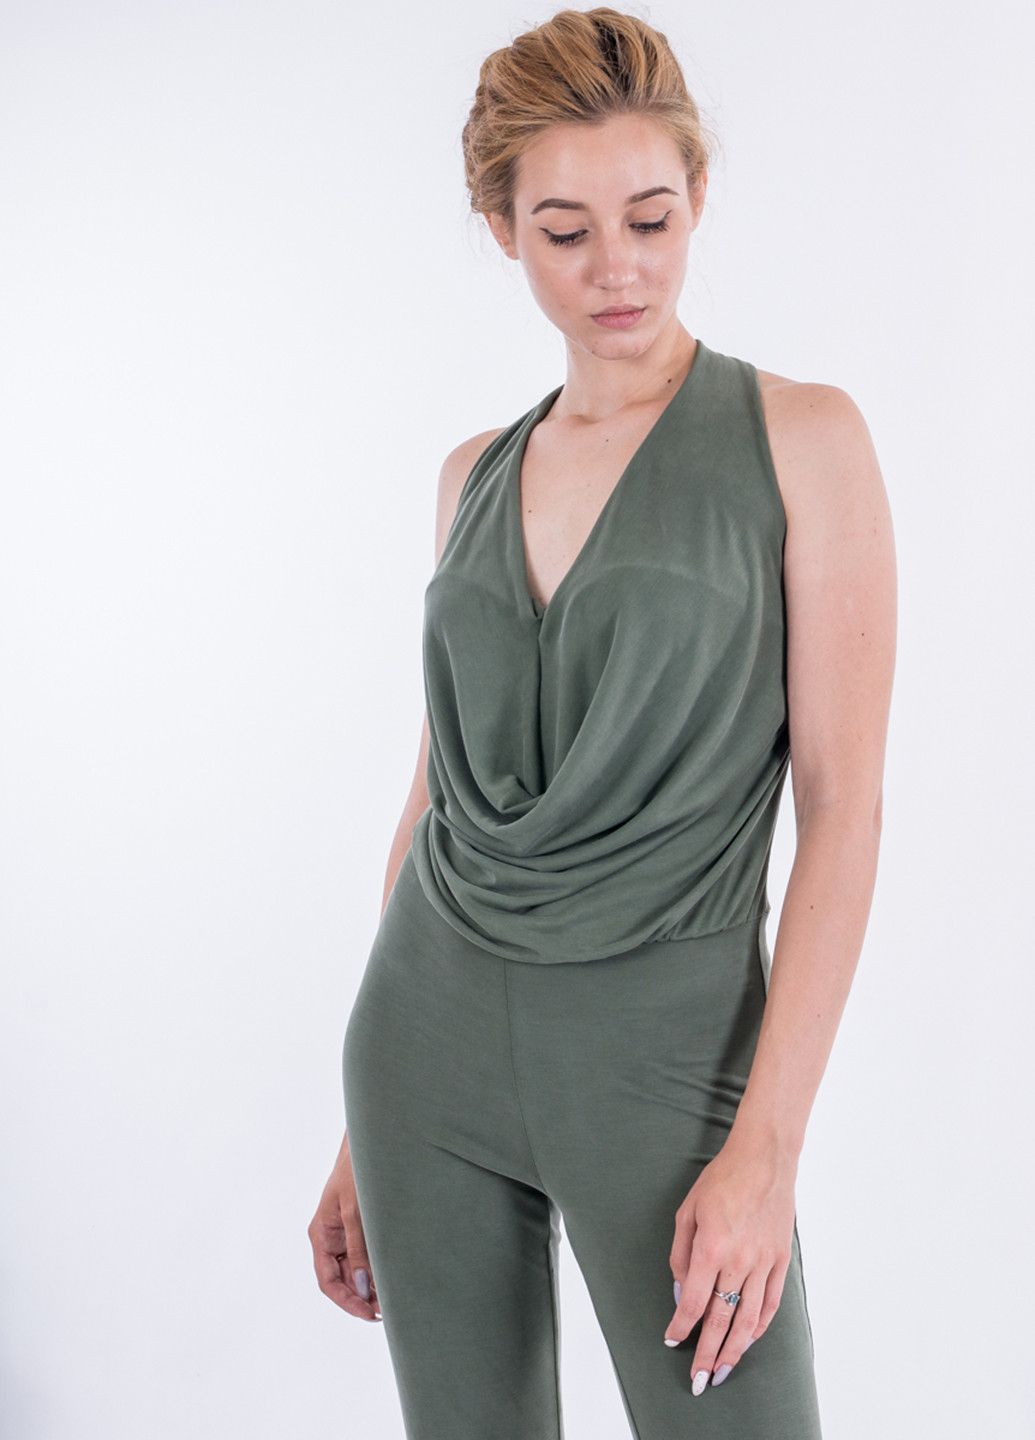 Комбинезон Sarah Chole комбинезон-брюки однотонный зелёный кэжуал модал